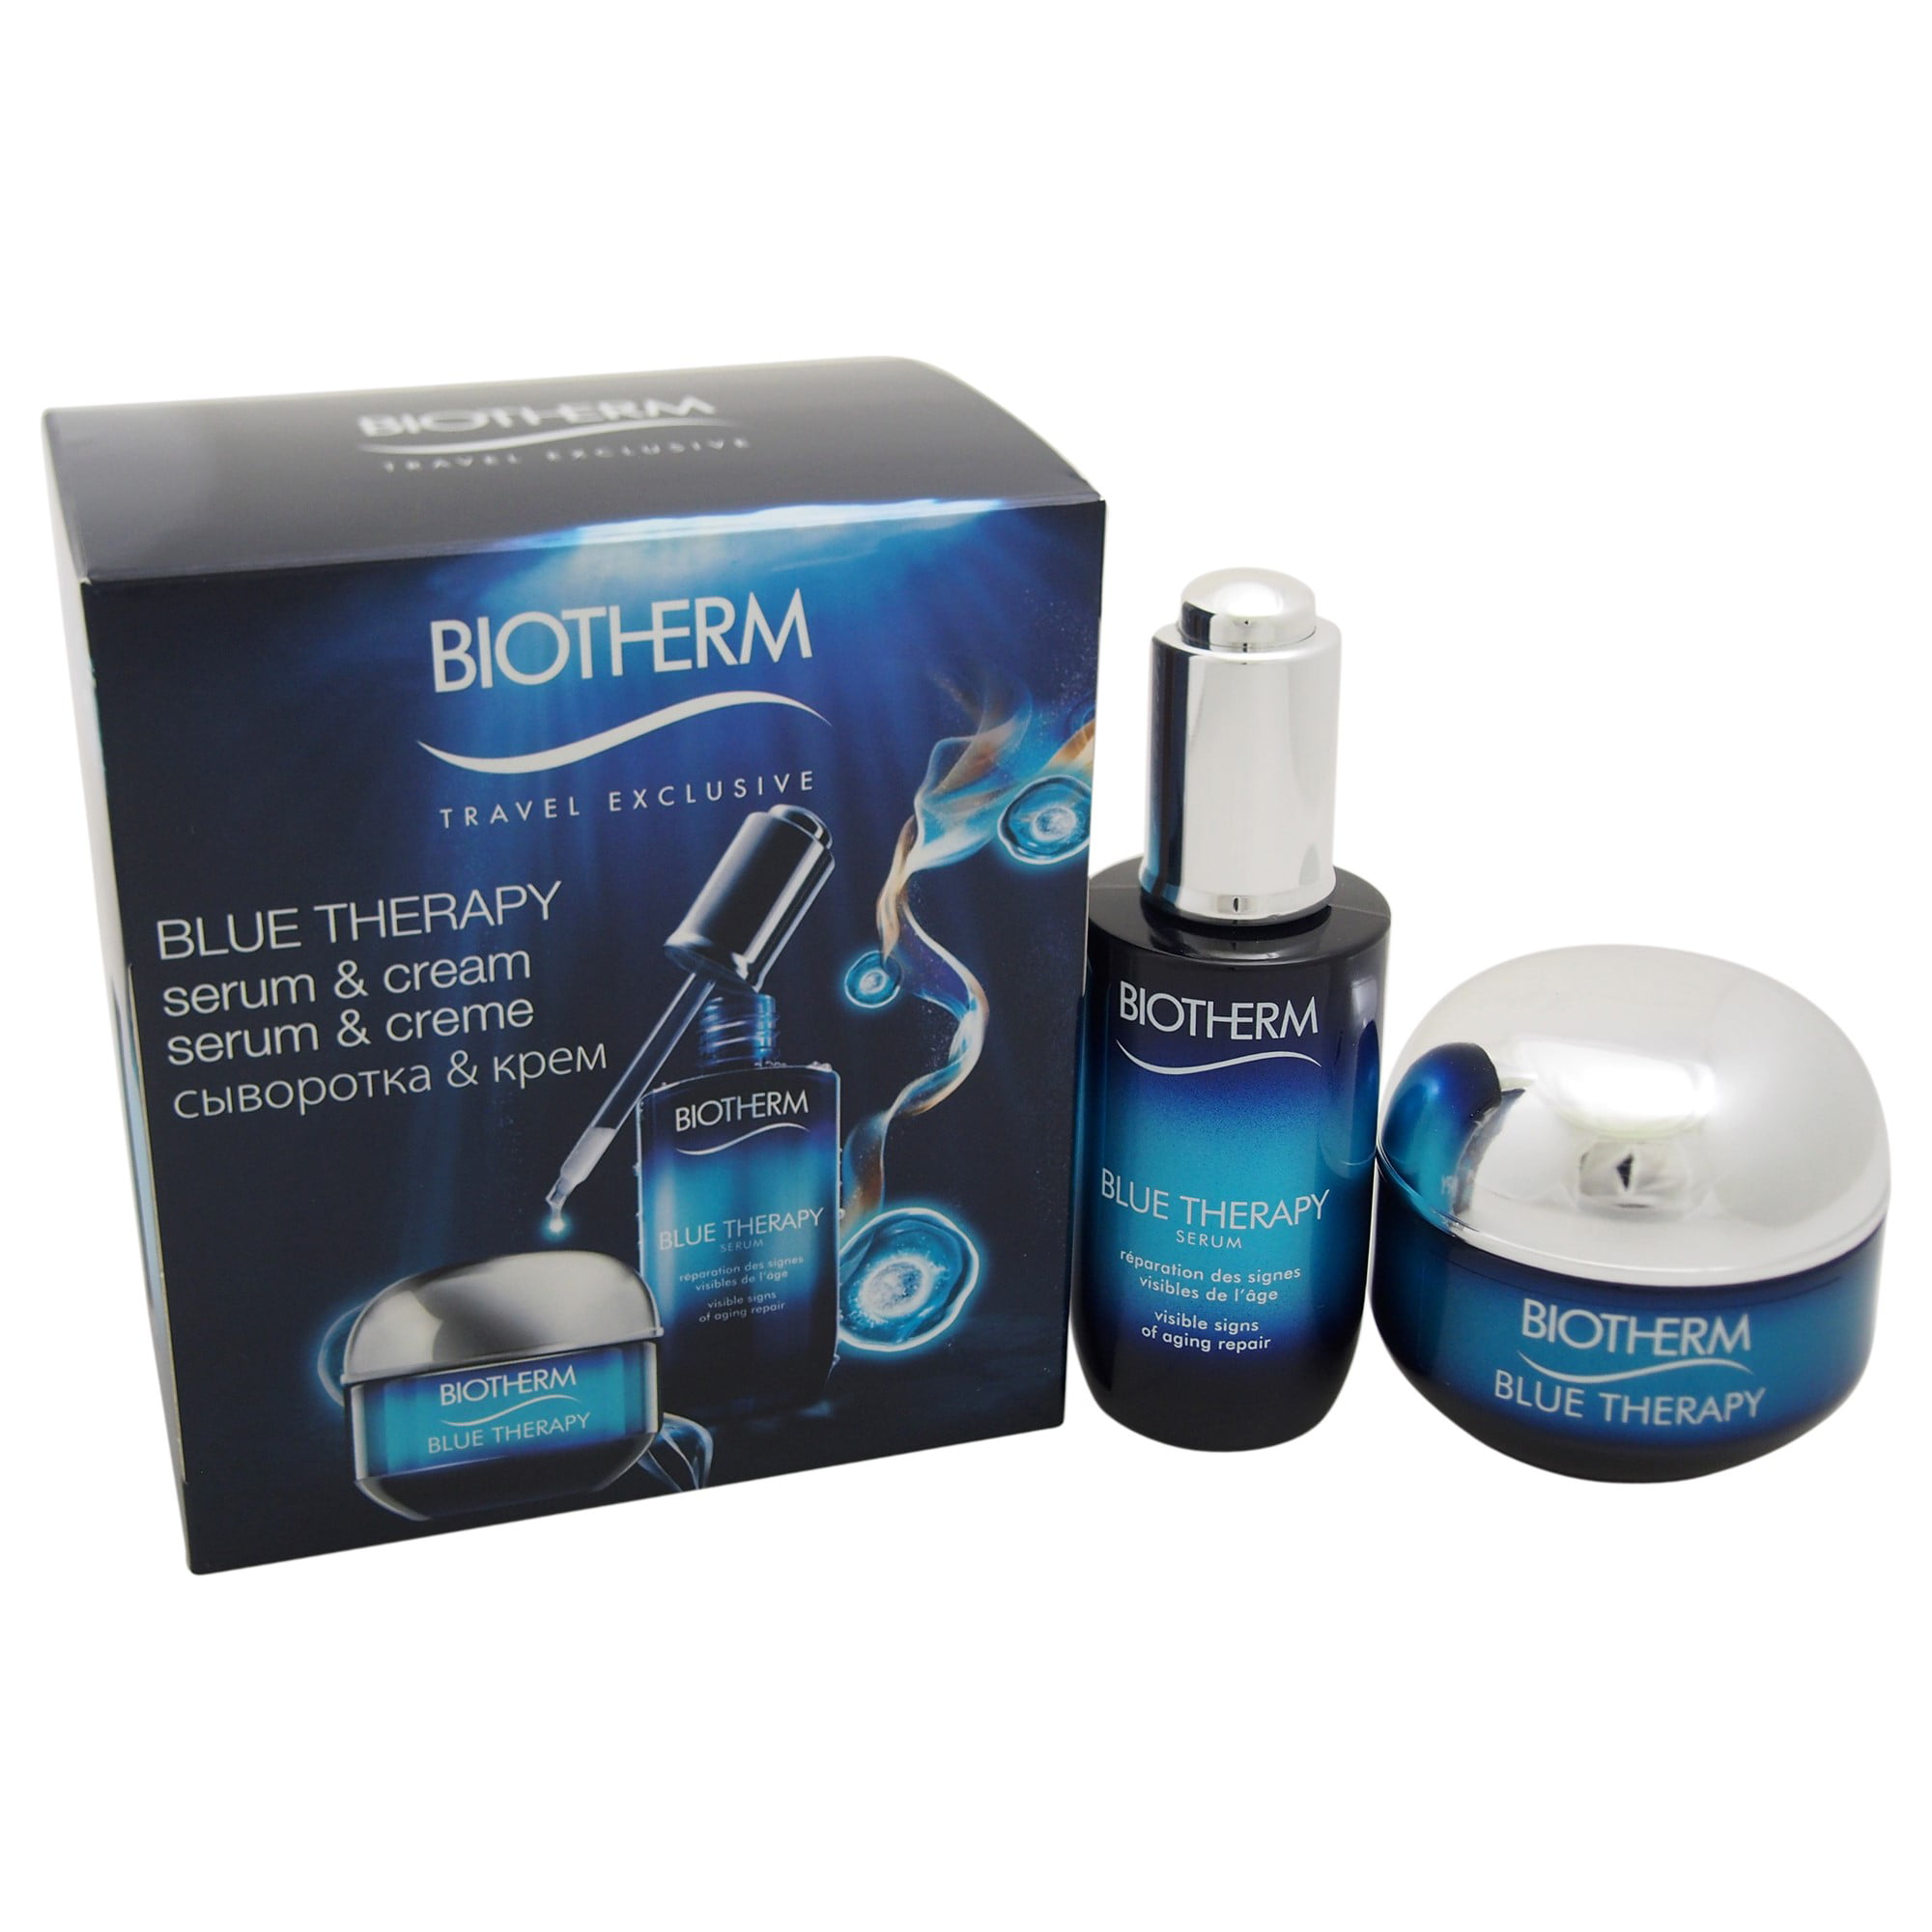 Biotherm Blue Therapy Serum Cream, 2 & Ct